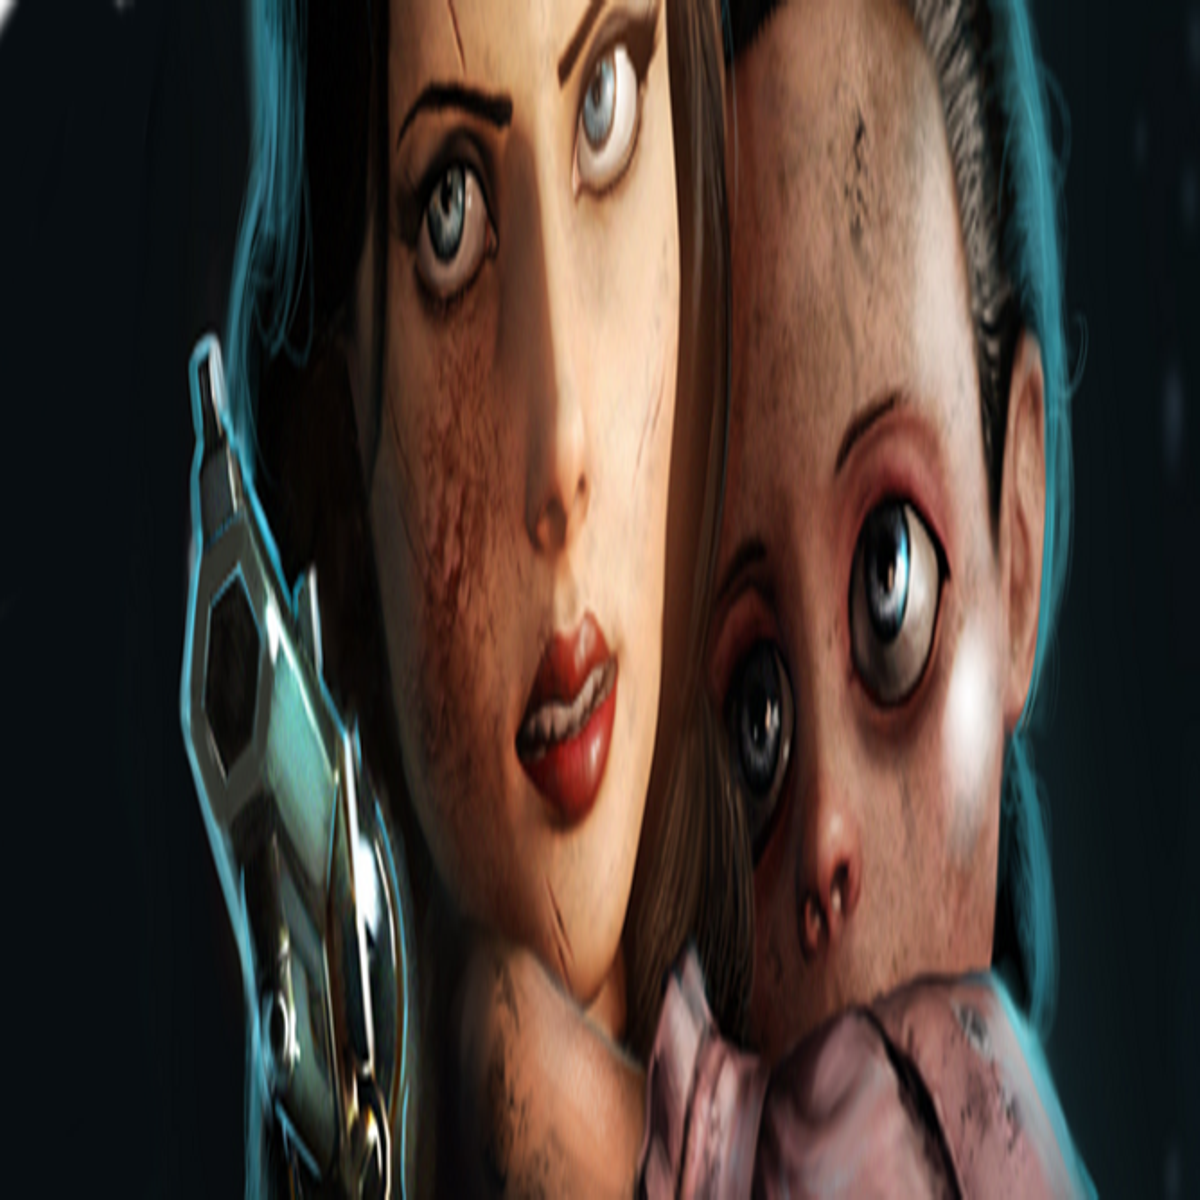 Wot I Think - BioShock Infinite: Burial At Sea Ep 2